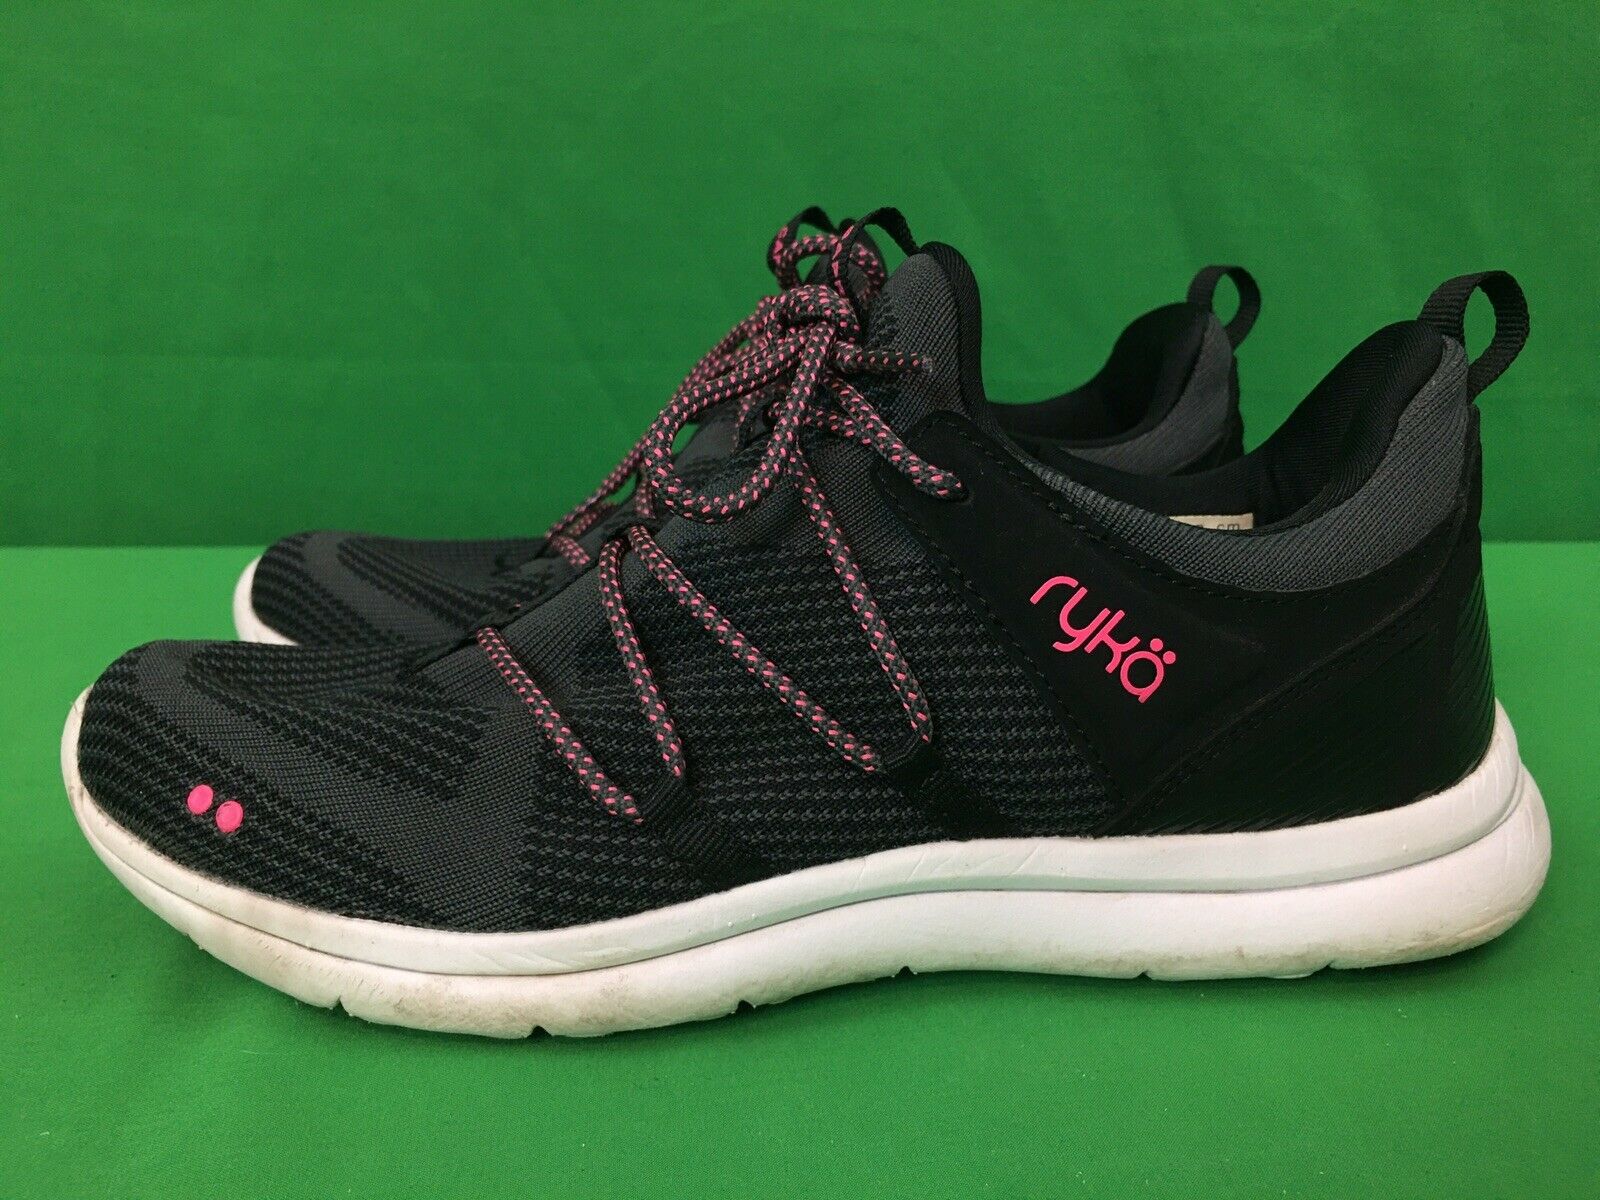 Ryka Womens Walking Shoes Black Pink White Size 7.5M Fast Free Shipping